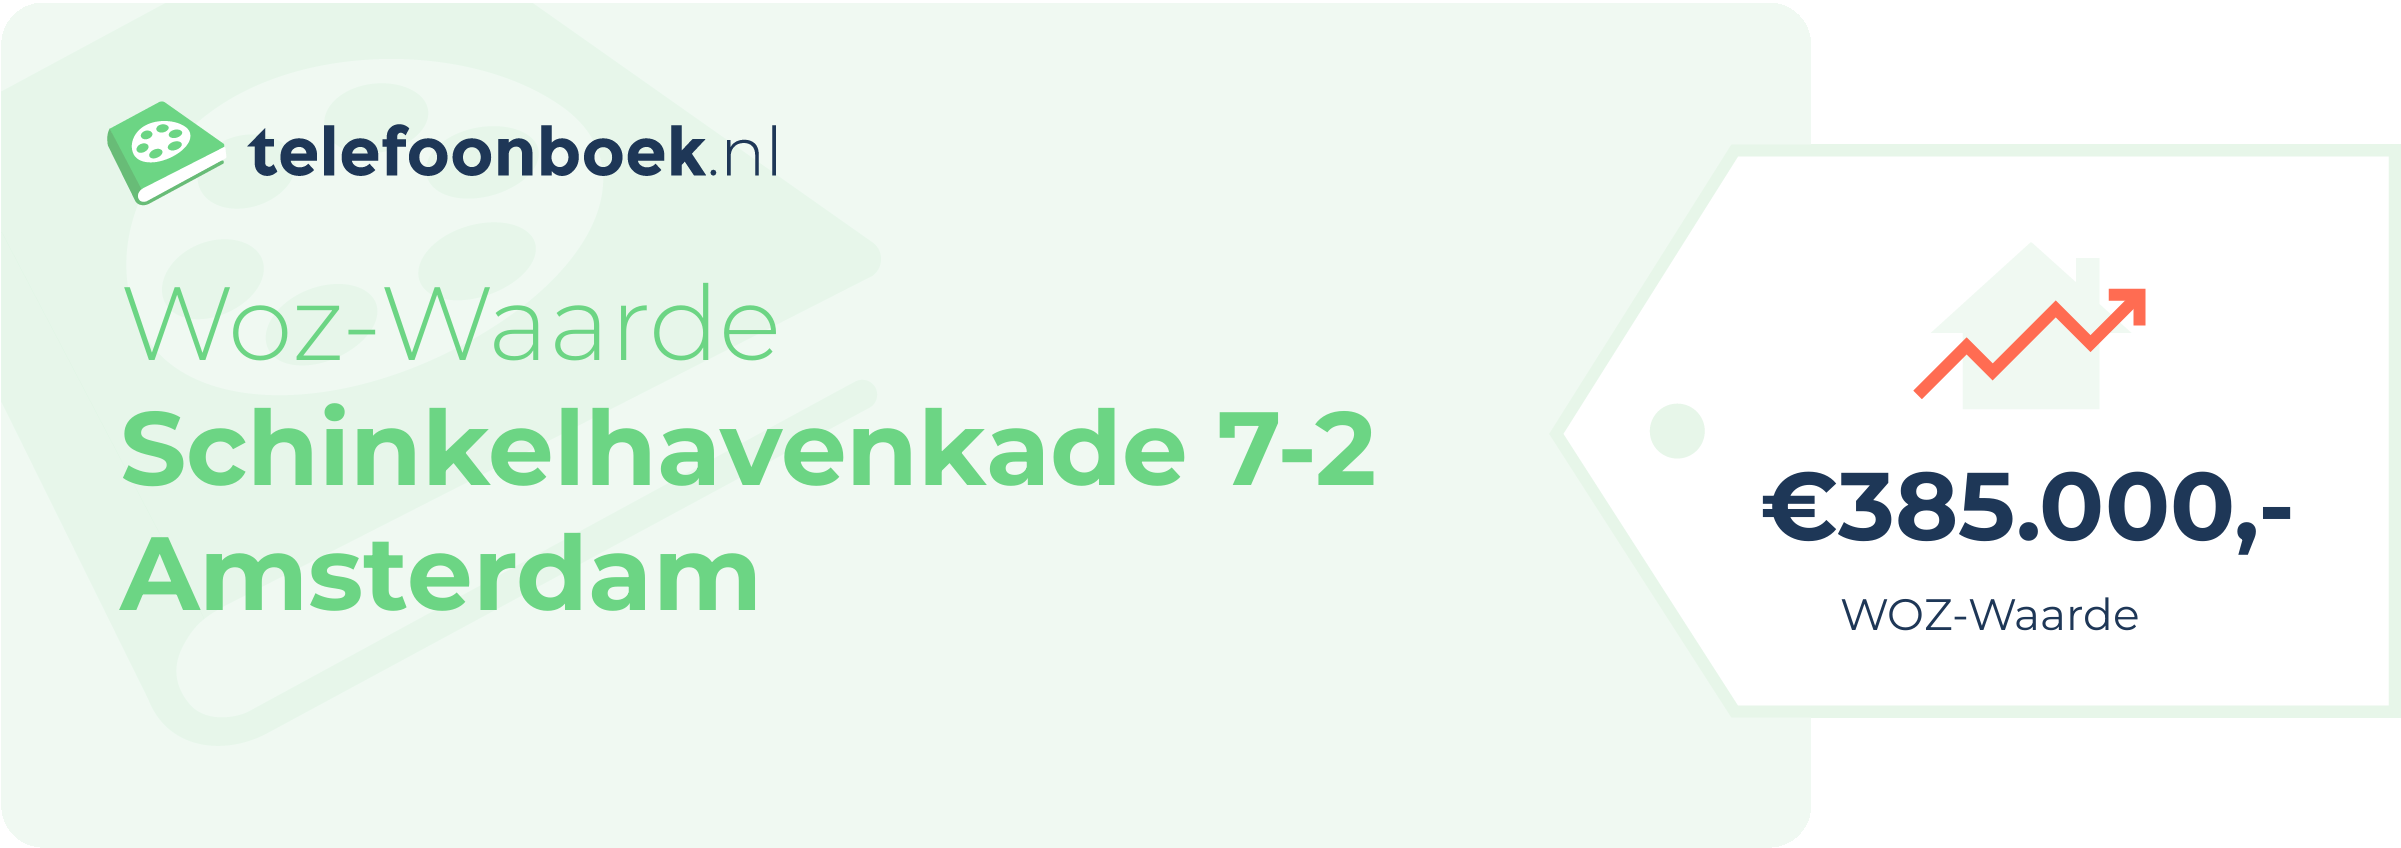 WOZ-waarde Schinkelhavenkade 7-2 Amsterdam